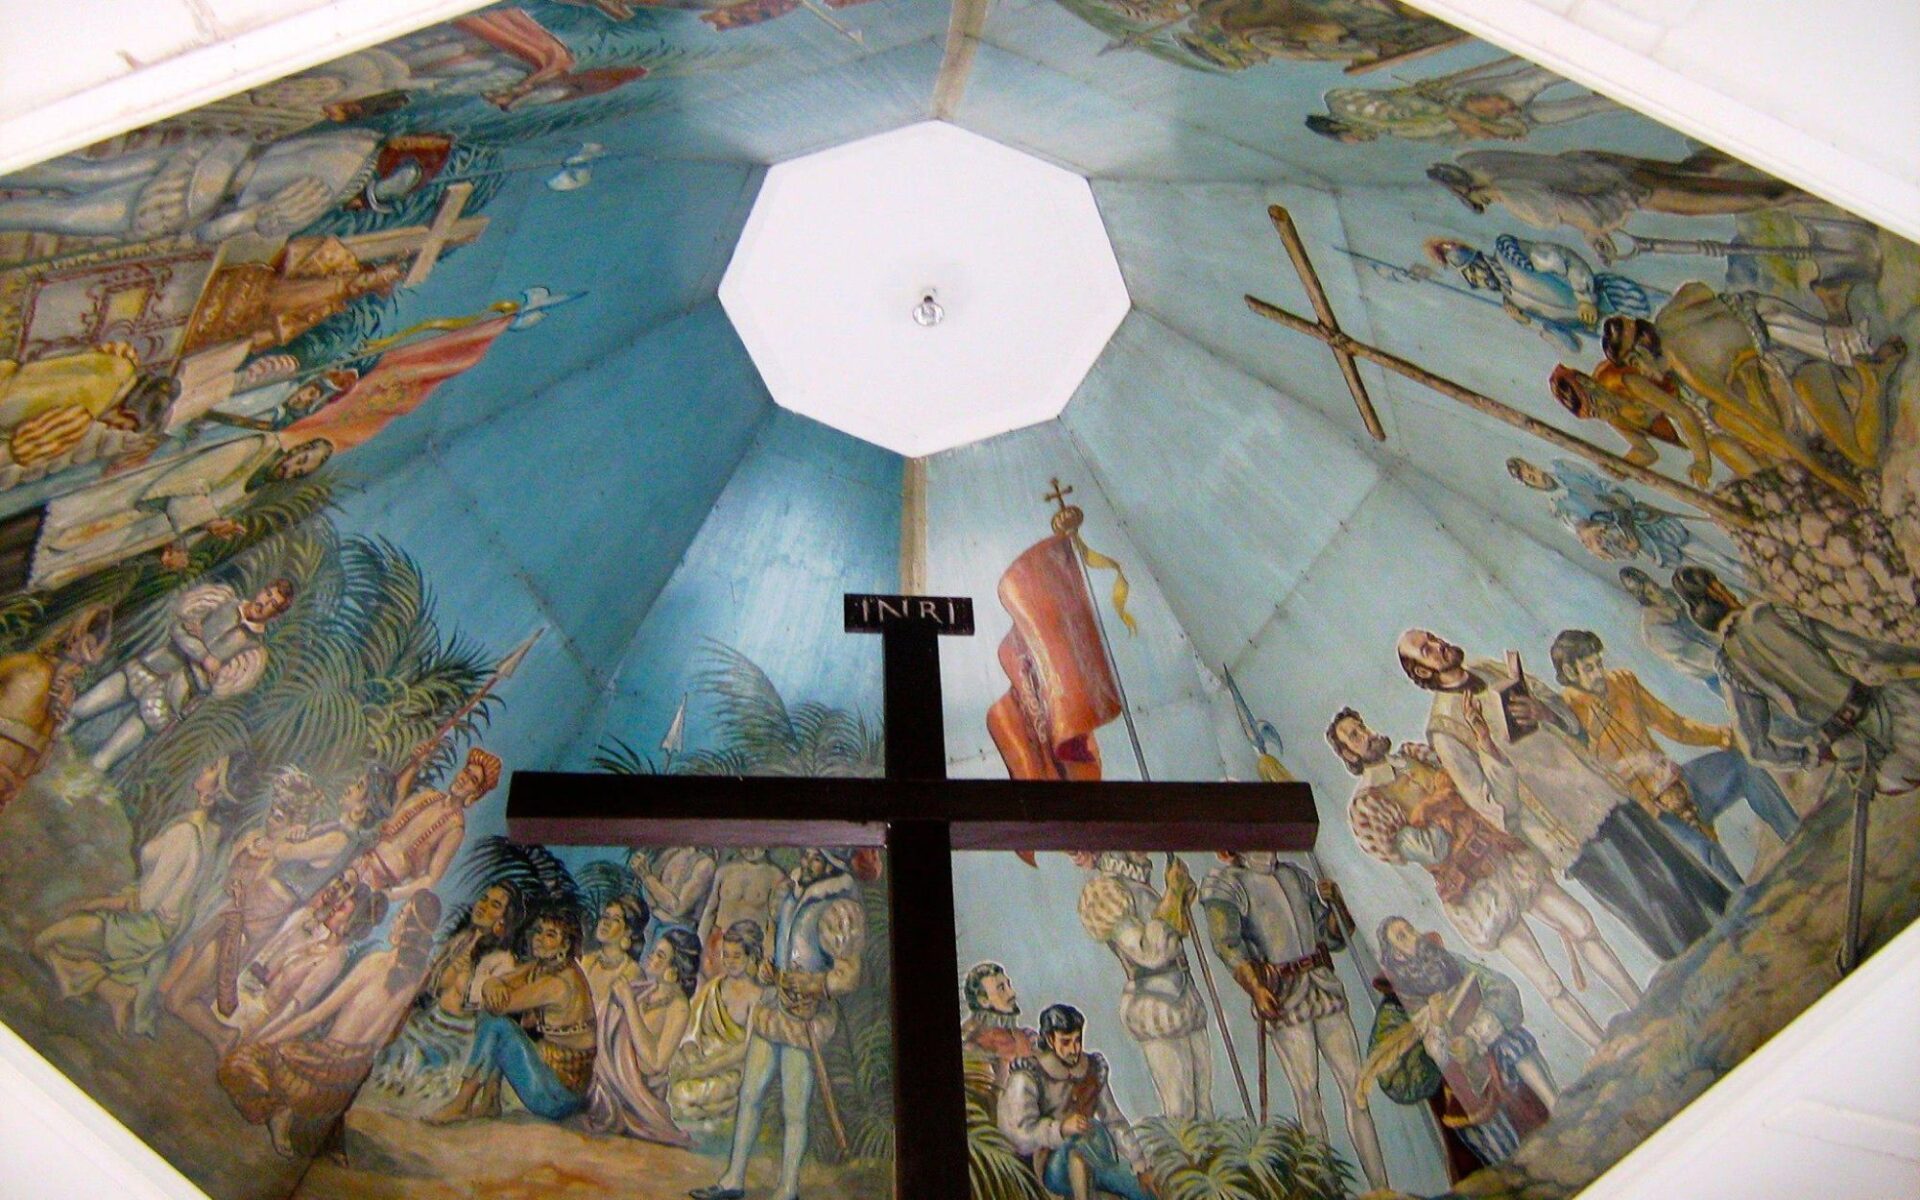 Magellan's Cross, Cebu